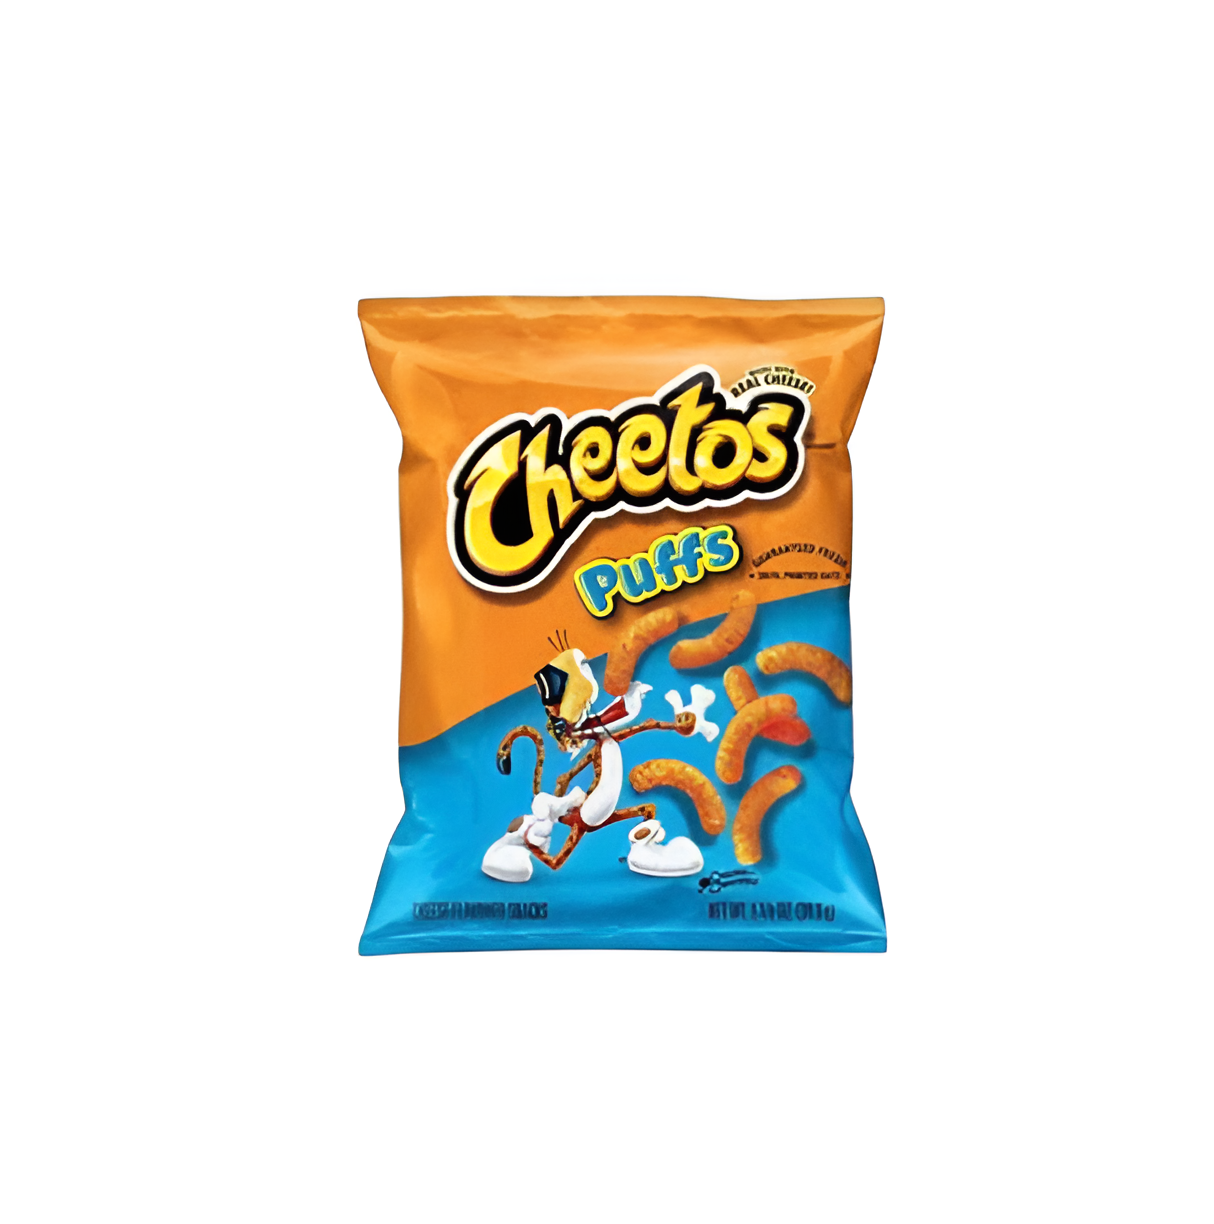 Cheetos Puffs Cheese Flavored Snacks  (990004769-4)